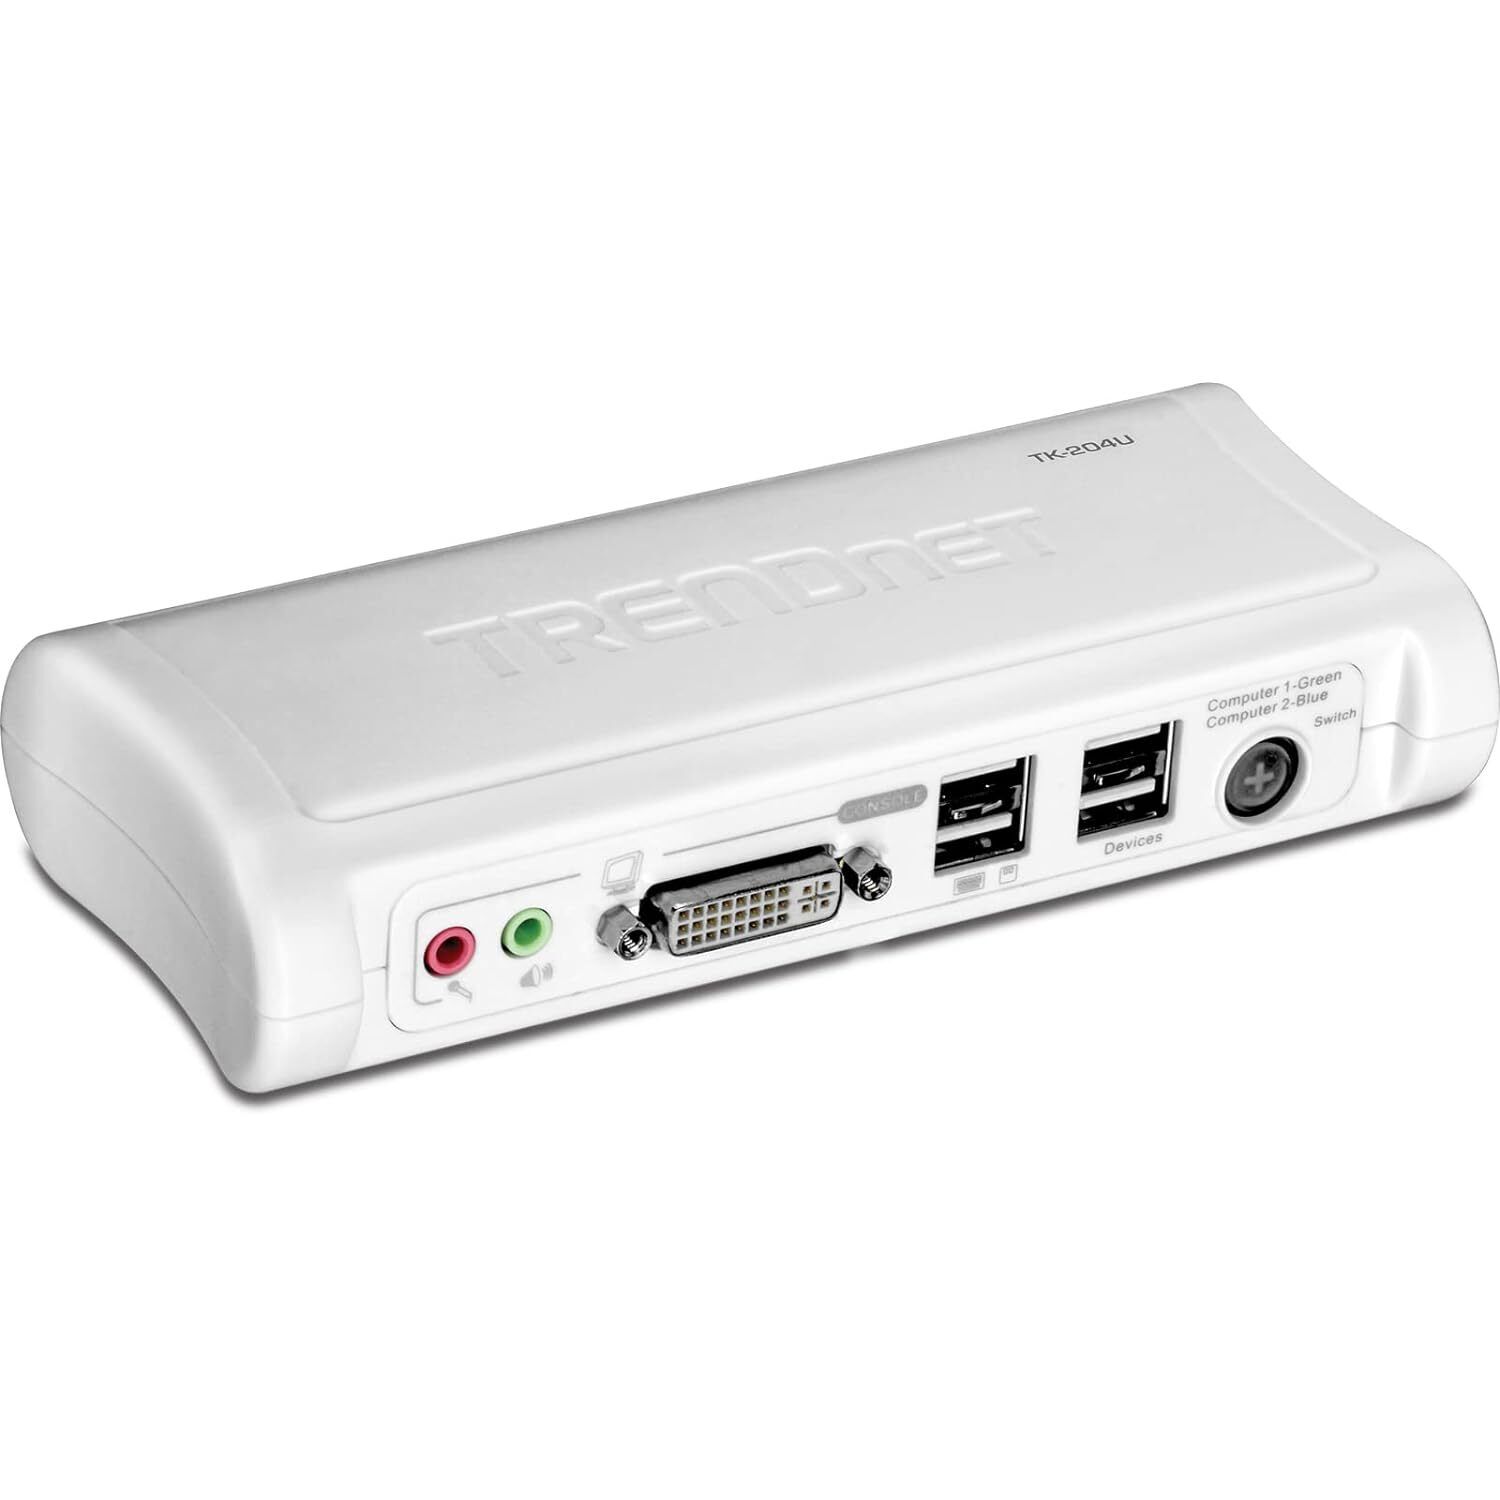 TRENDnet 2-Port DVI USB KVM Switch & Cable Kit with Audio, Manage Two PCs, 2 x